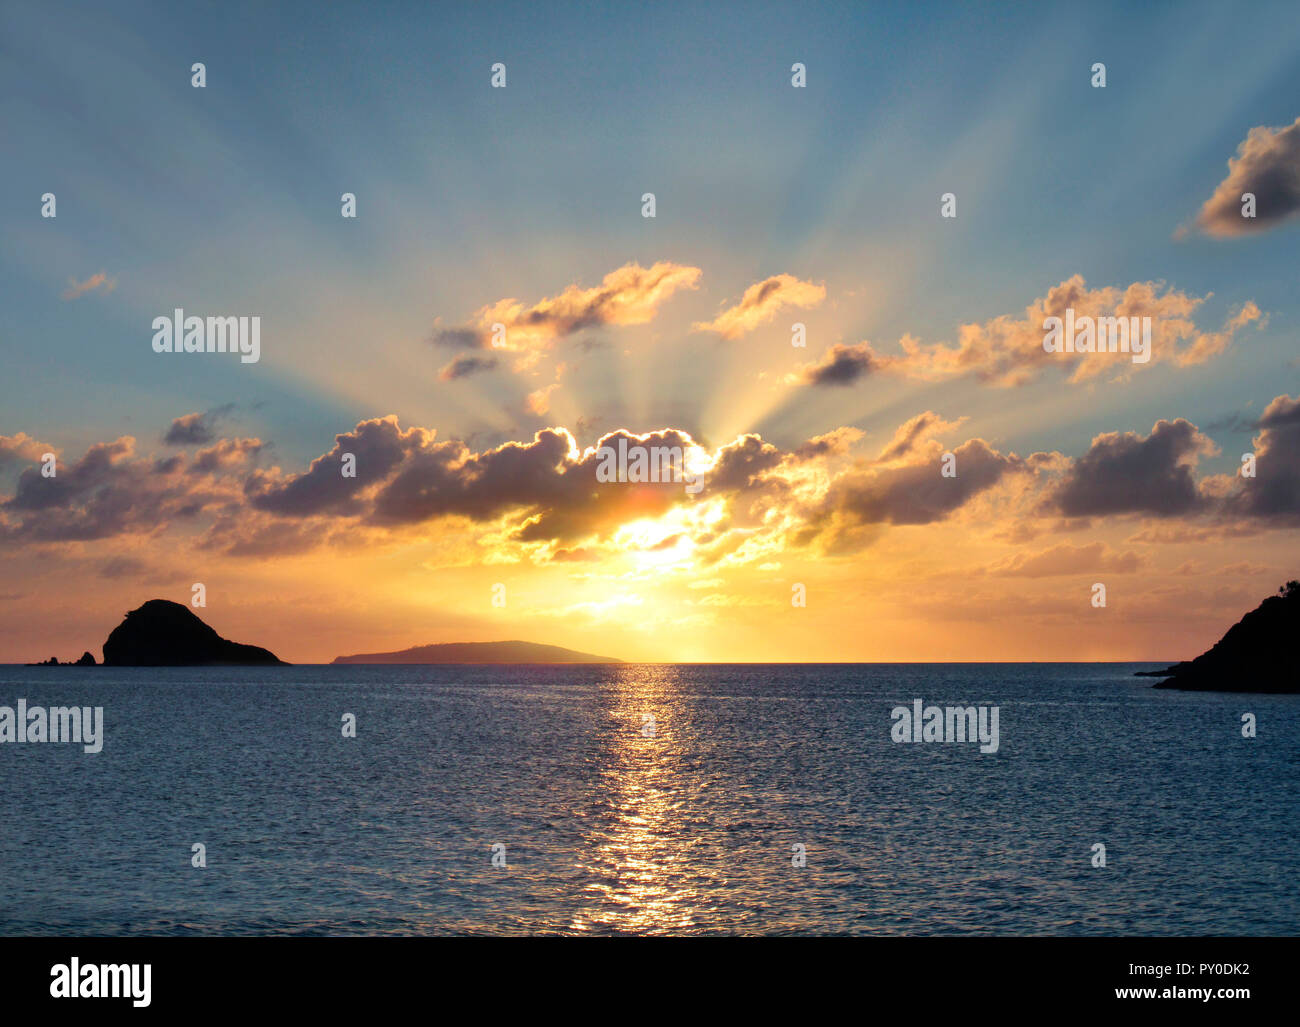 Tranquil scene with sunset over sea, Calaguas Islands, Camarines Norte, Philippines Stock Photo